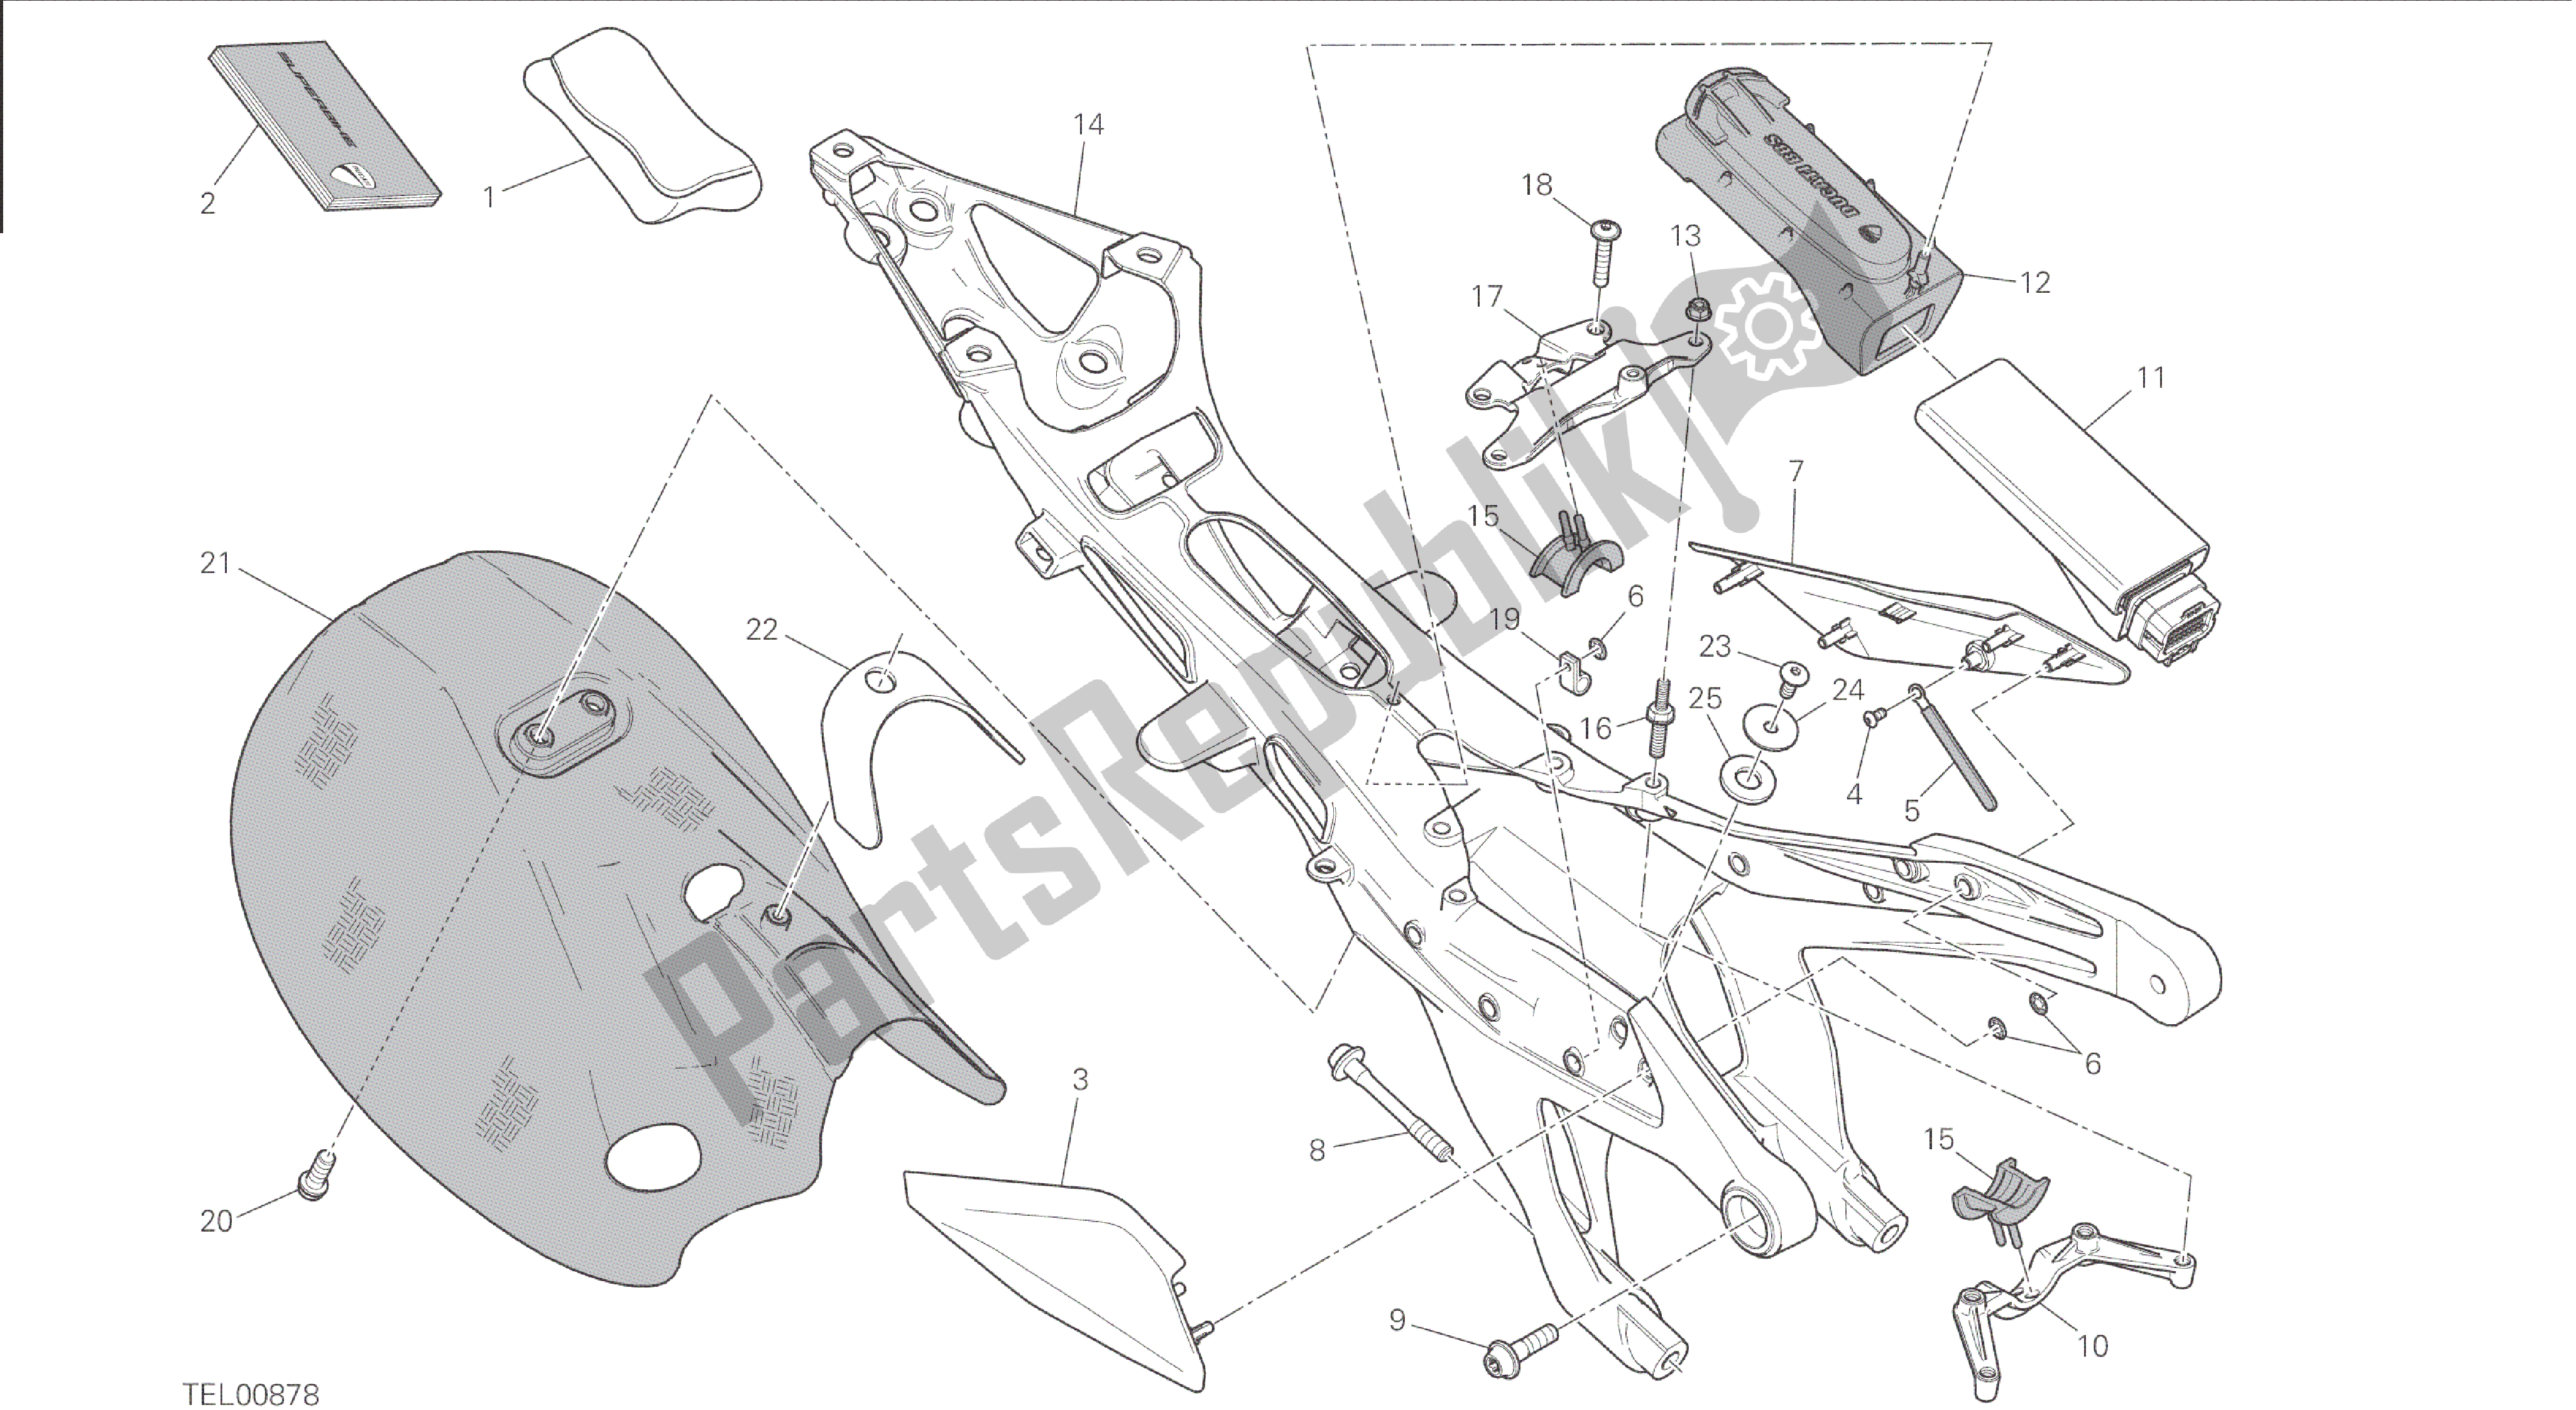 Alle onderdelen voor de Tekening 027 - Achterframe Comp. [mod: 1199 R; Xst: Aus, Eur, Fra, Jap, Twn] Groepsframe van de Ducati Panigale 1198 2015